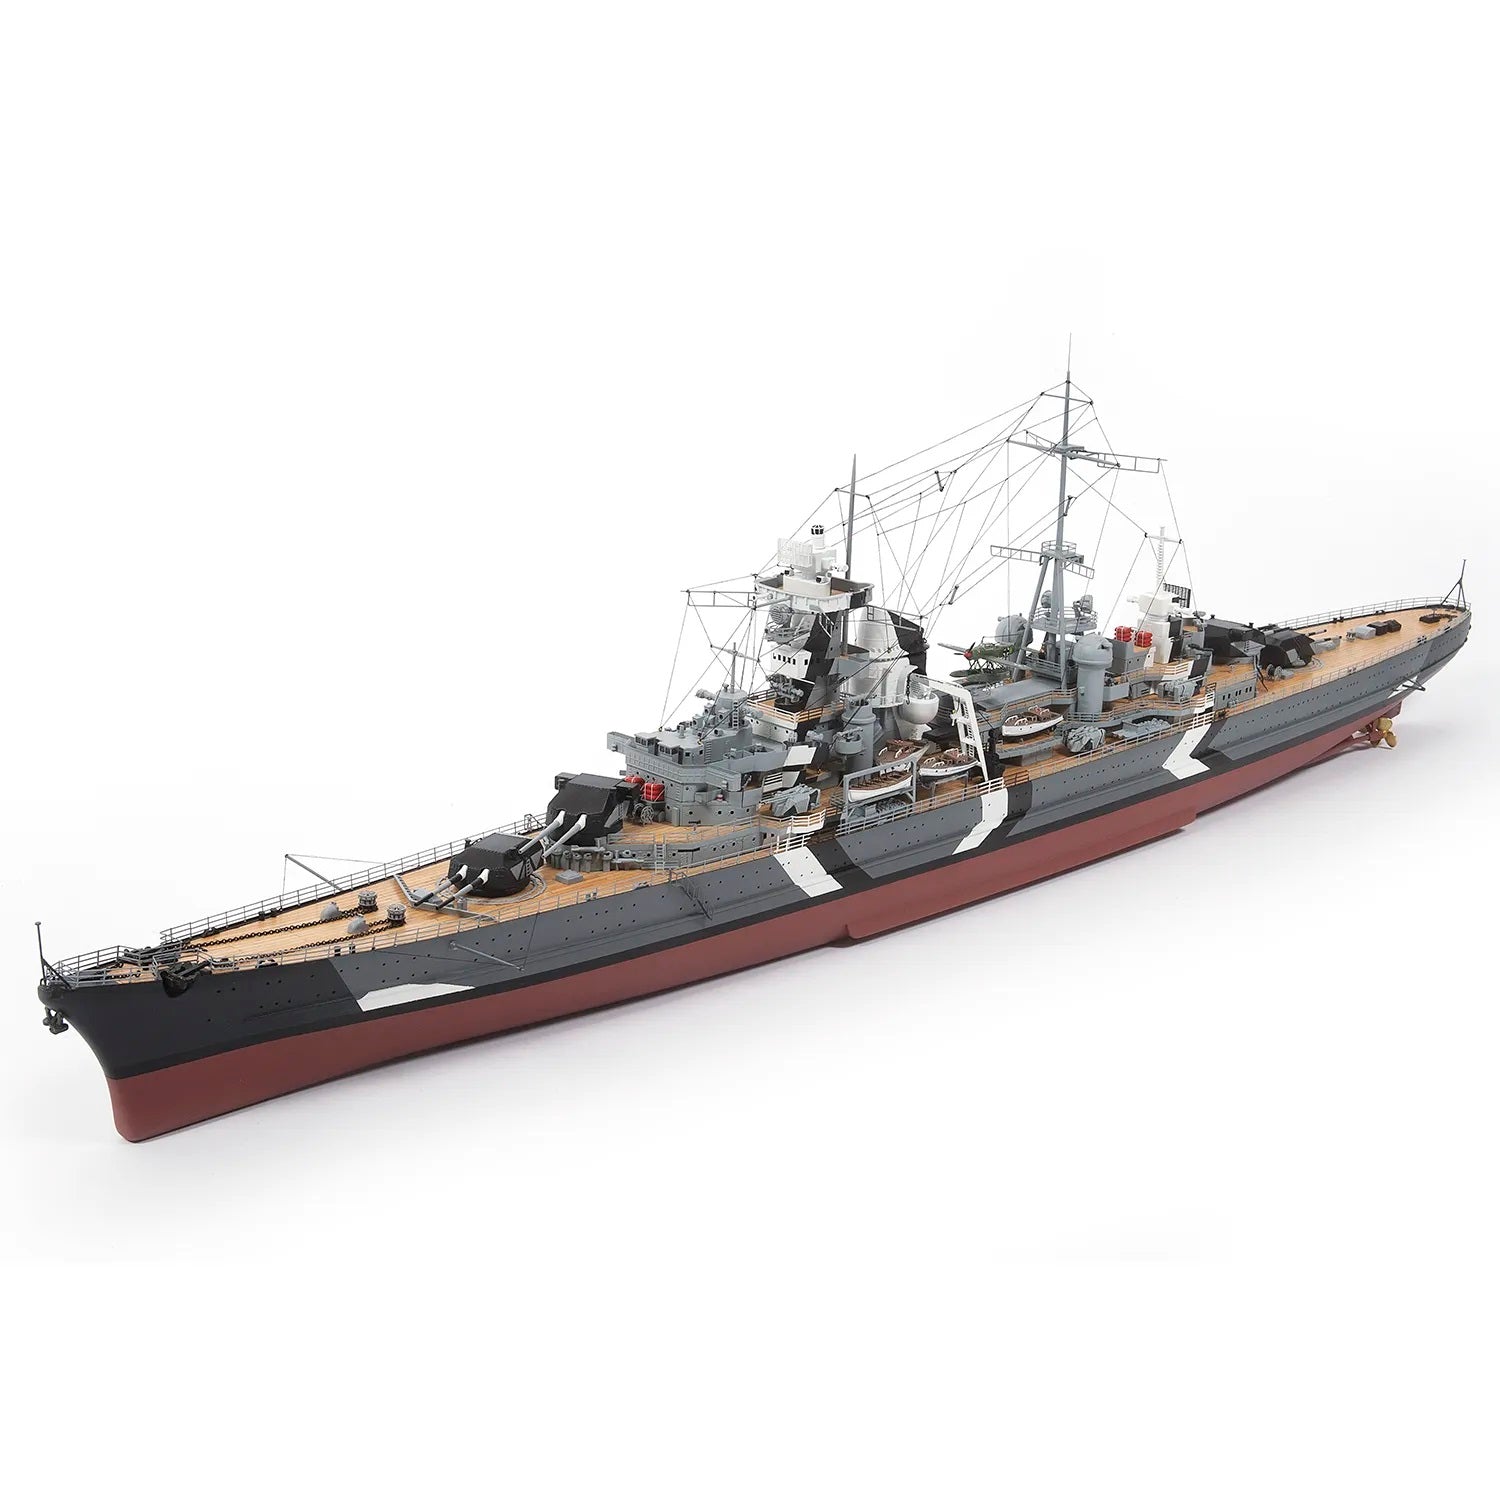 OcCre 'Prinz Eugen' Admiral Hipper Class Cruiser Wooden Model Ship Kit, 1/200 Scale - Micro - Mark Scale Model Kits